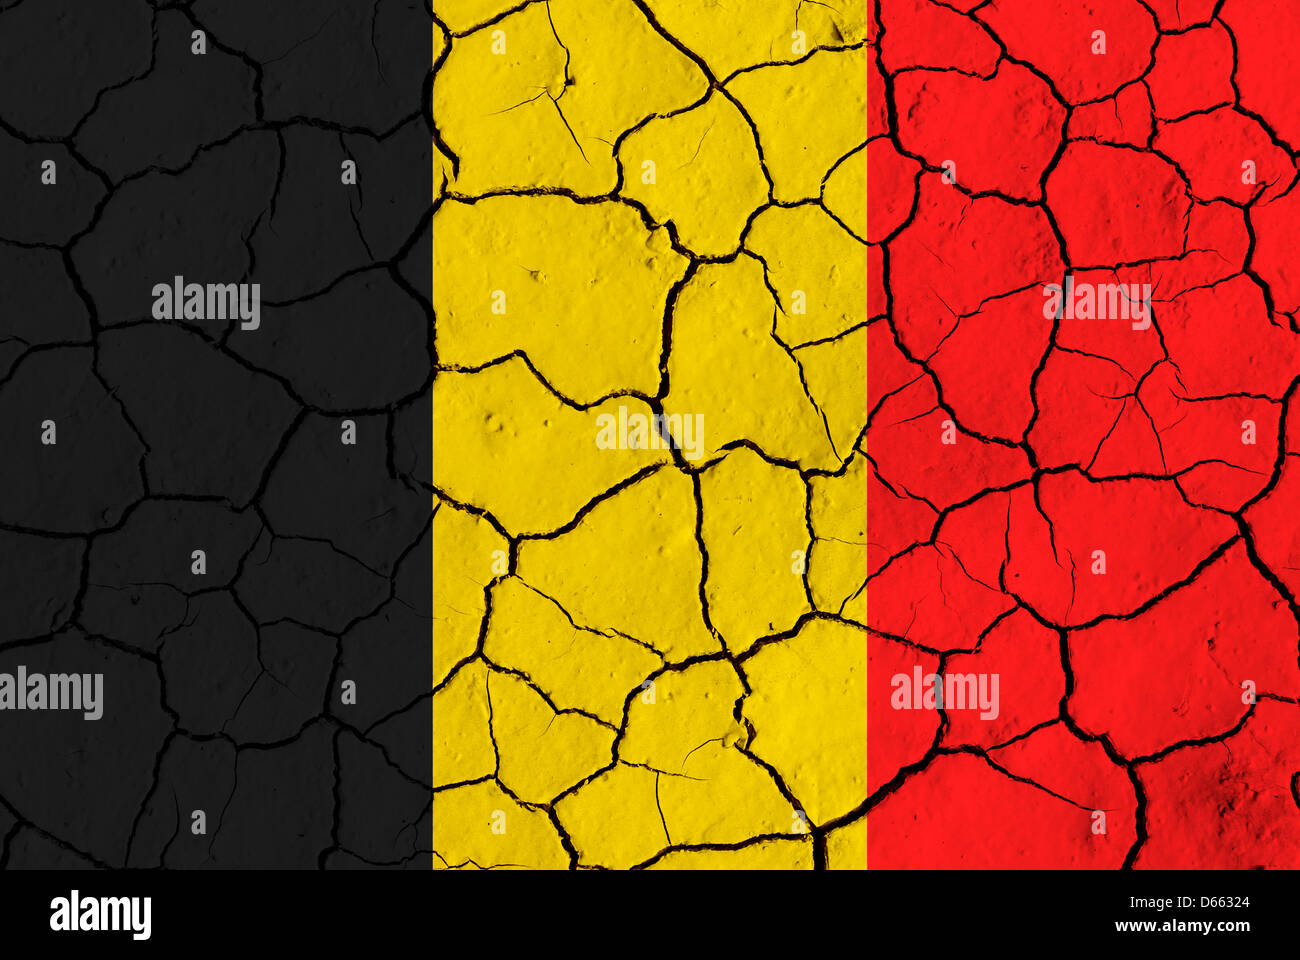 Flag of Belgium over cracked background Stock Photo